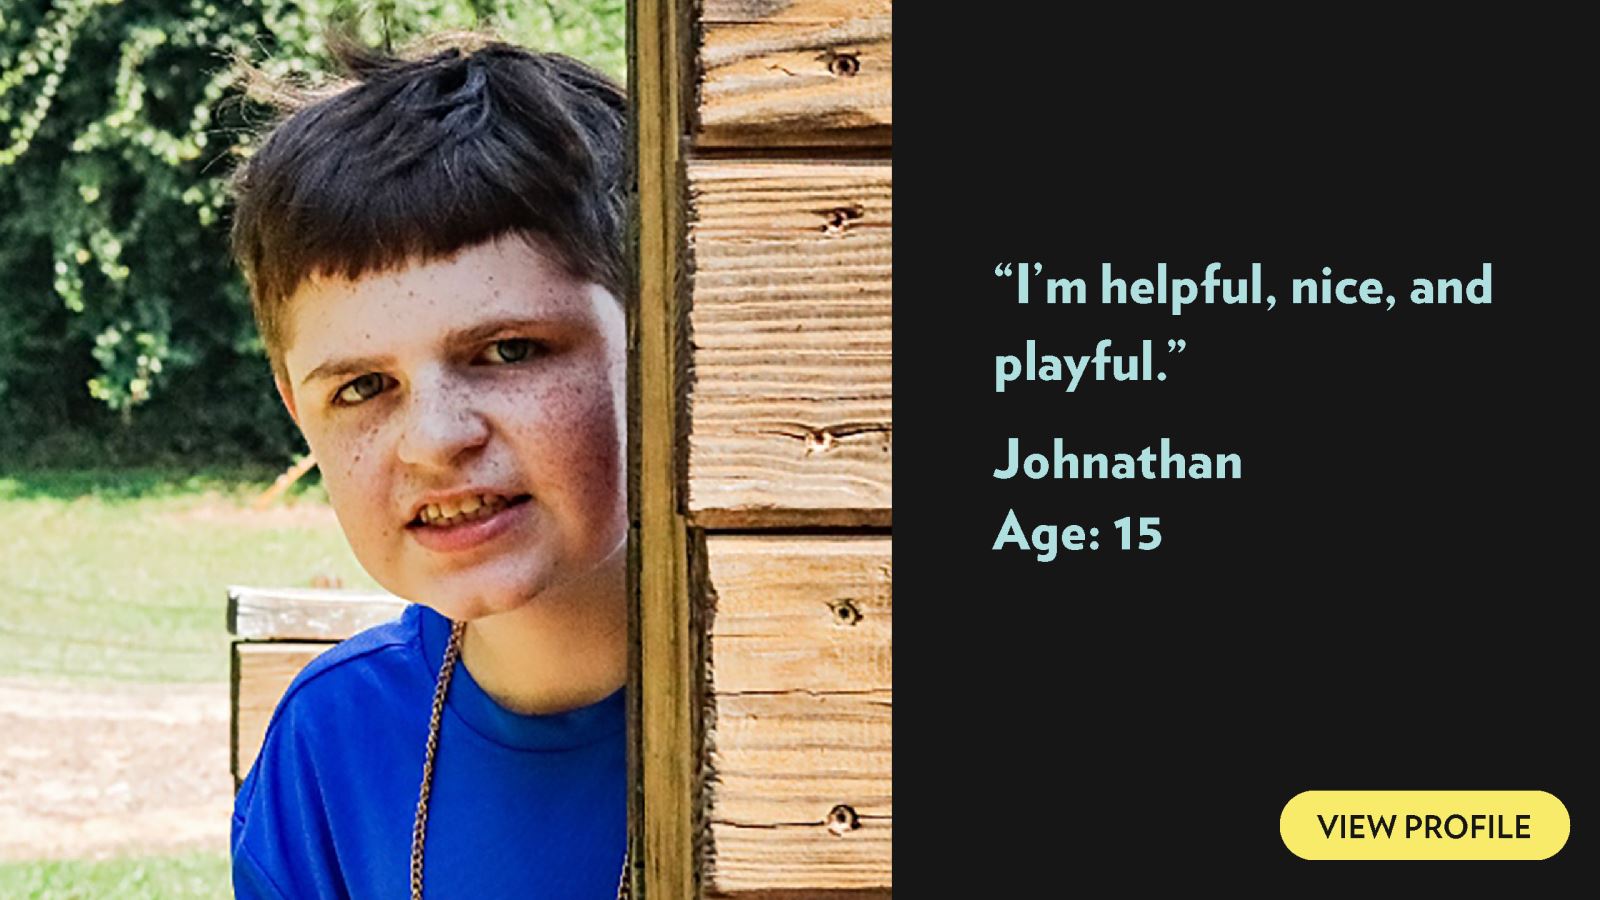 I'm helpful, nice, and playful. Johnathan, age 15. View profile.